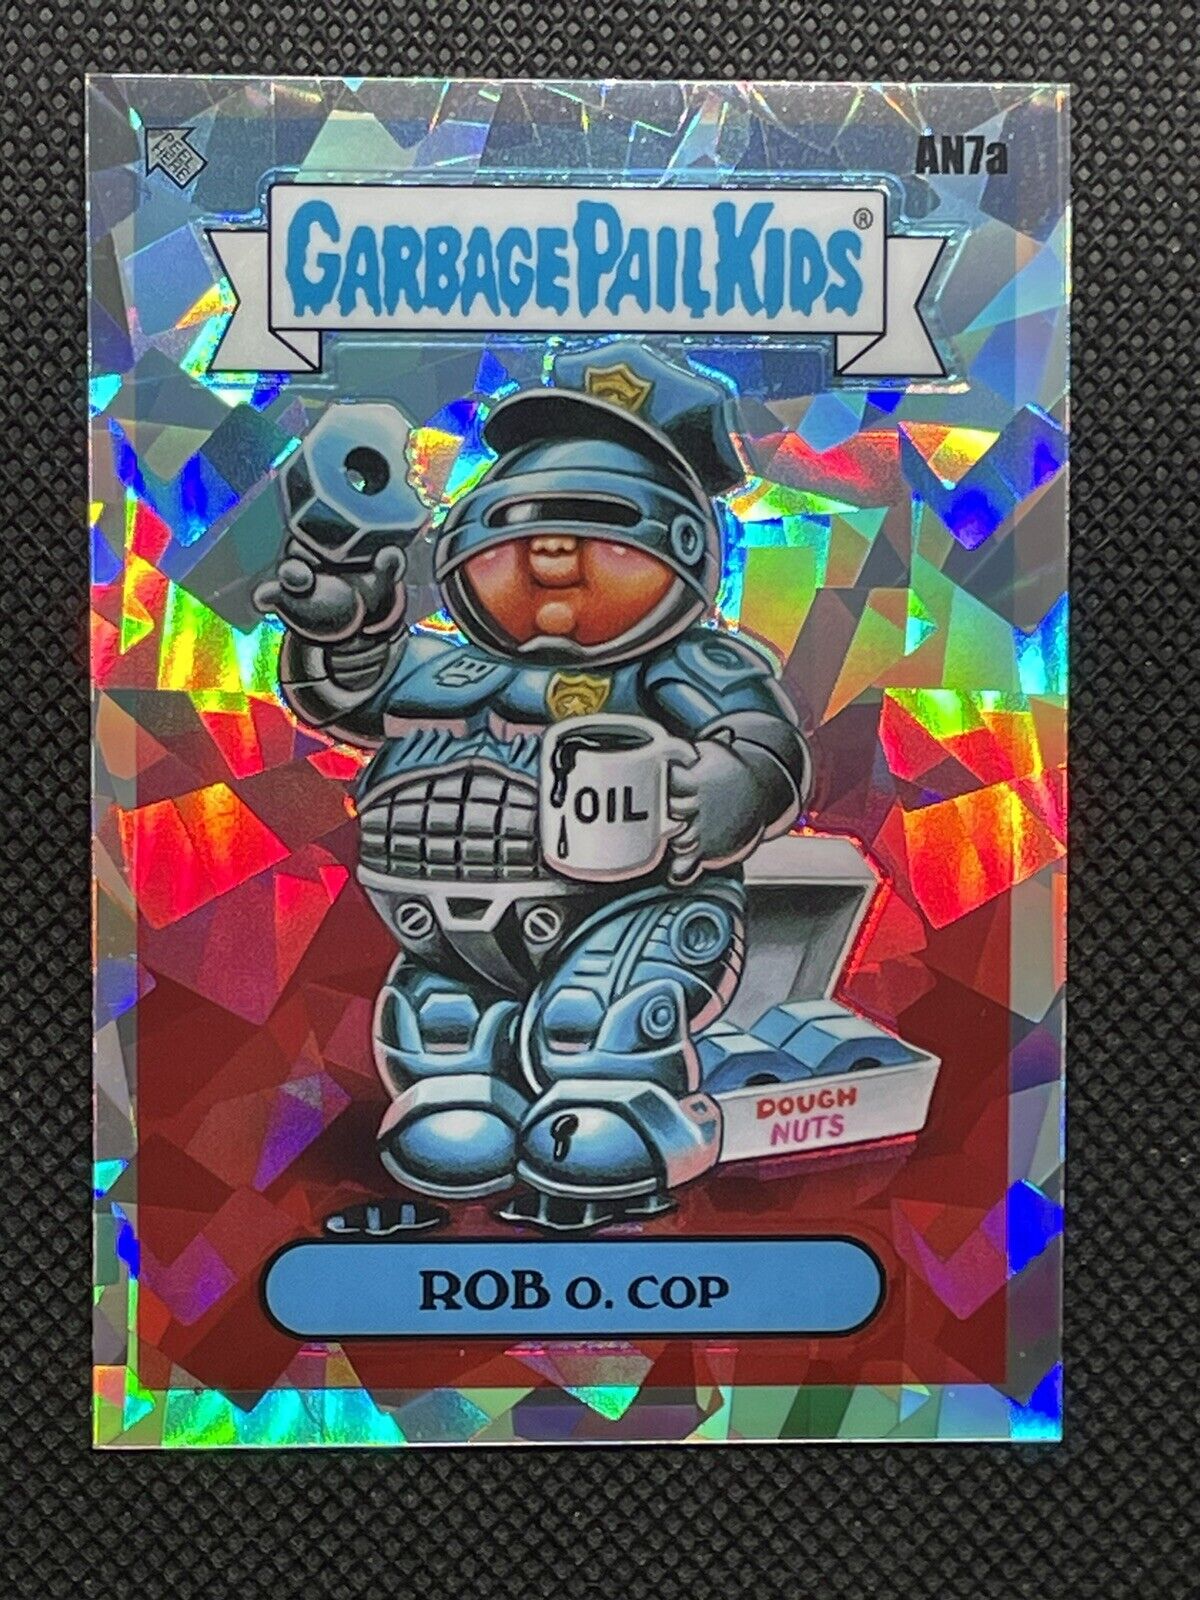 2020 Topps Chrome Garbage Pail Kids Series 3 - Rob O. Cop Atomic Refractor #AN7a